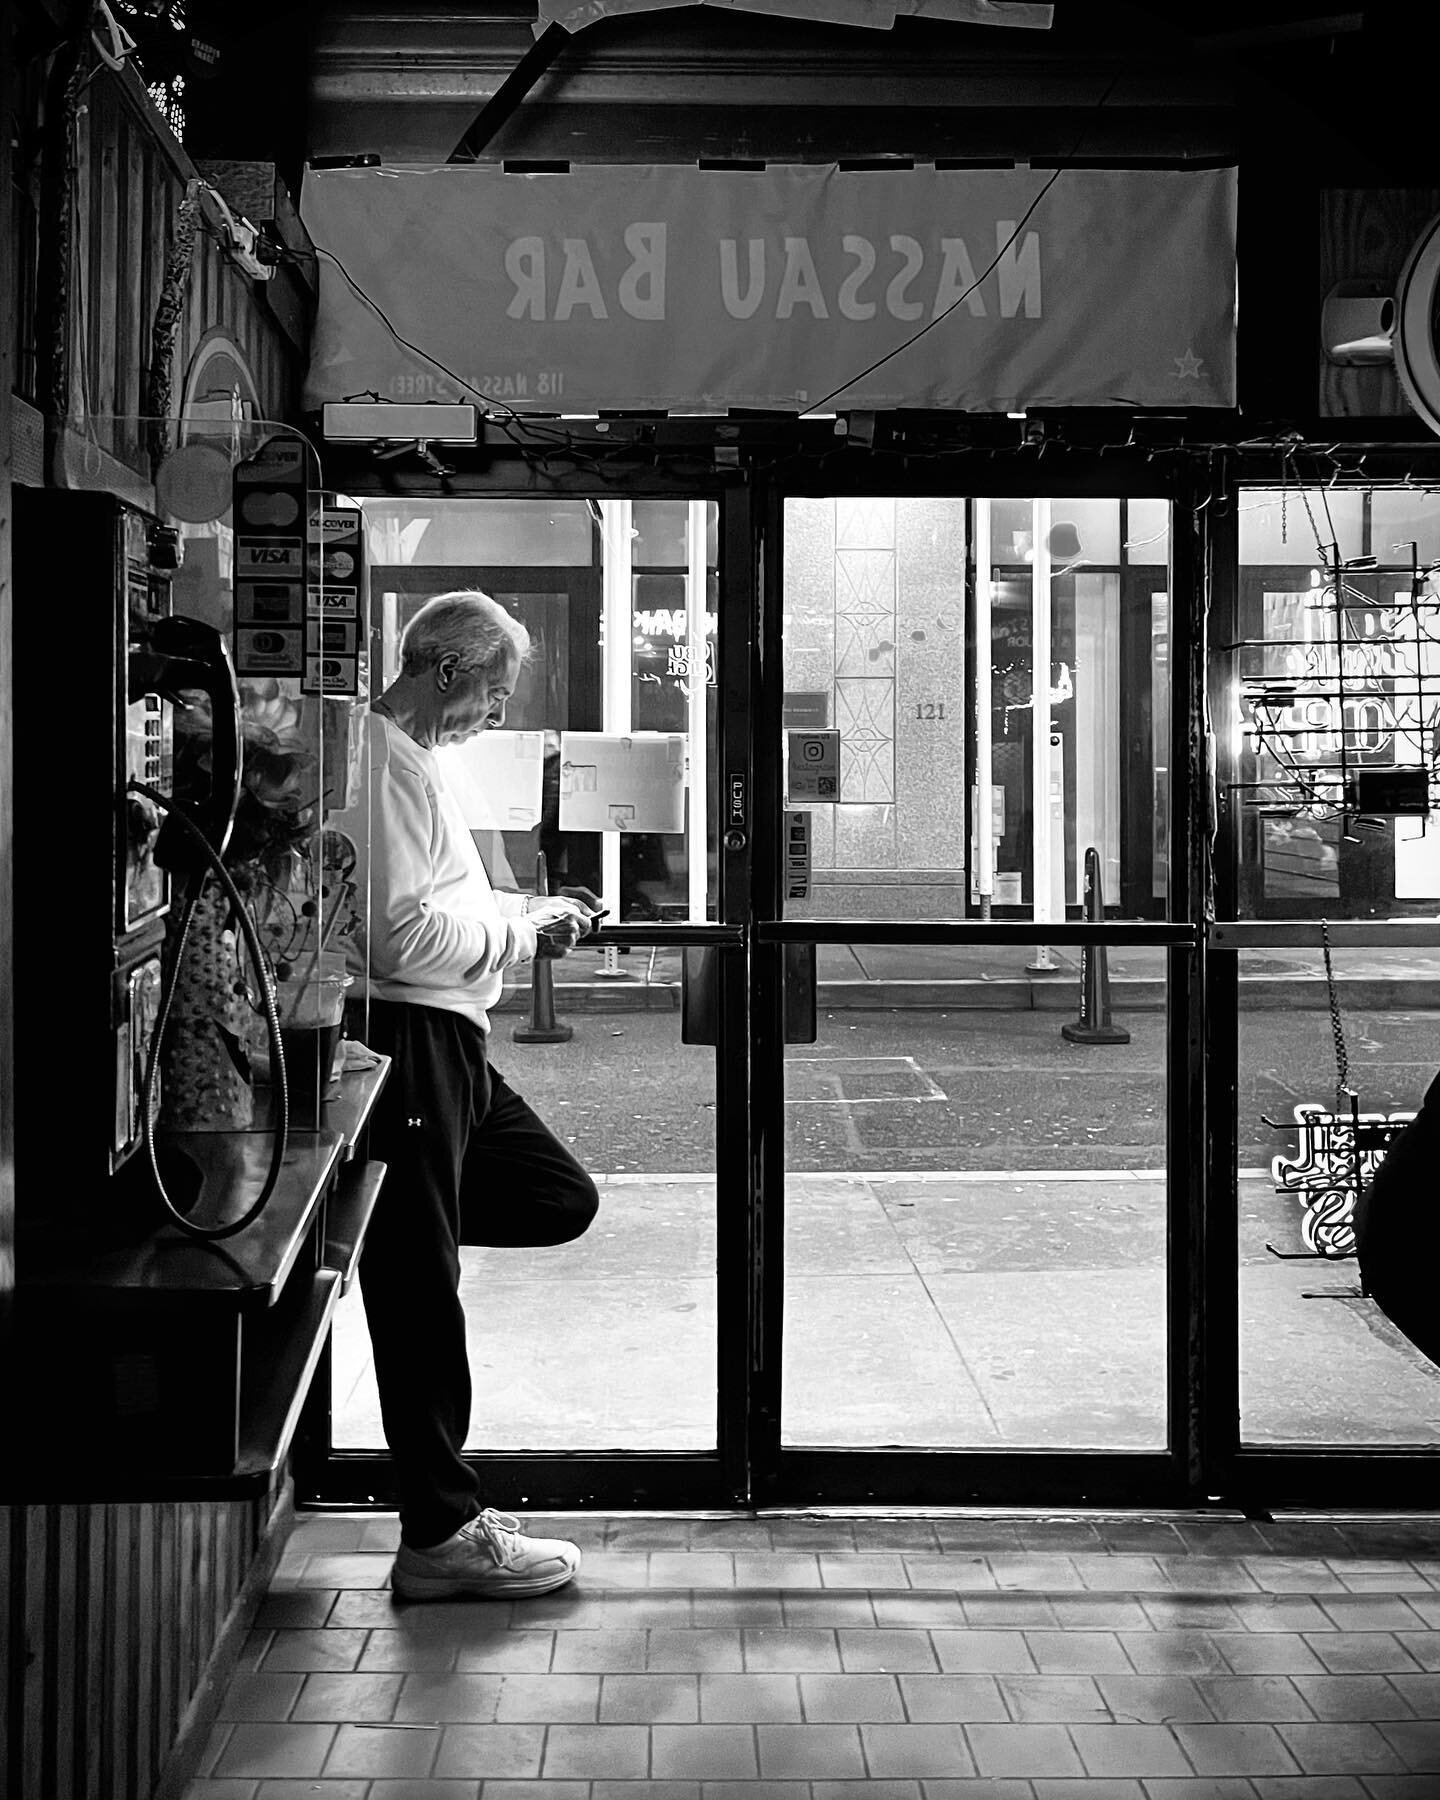 &ldquo;Nassau Bar&rdquo; is everything you thought it would be.
.
.
#financialdistrict #newyork #night #bnw #bnwphotography #bnwmood #bnw_captures #bnwsouls #bnwzone #bnwphoto #burnmagazine #anothemag #streetphotography #bar #barroom